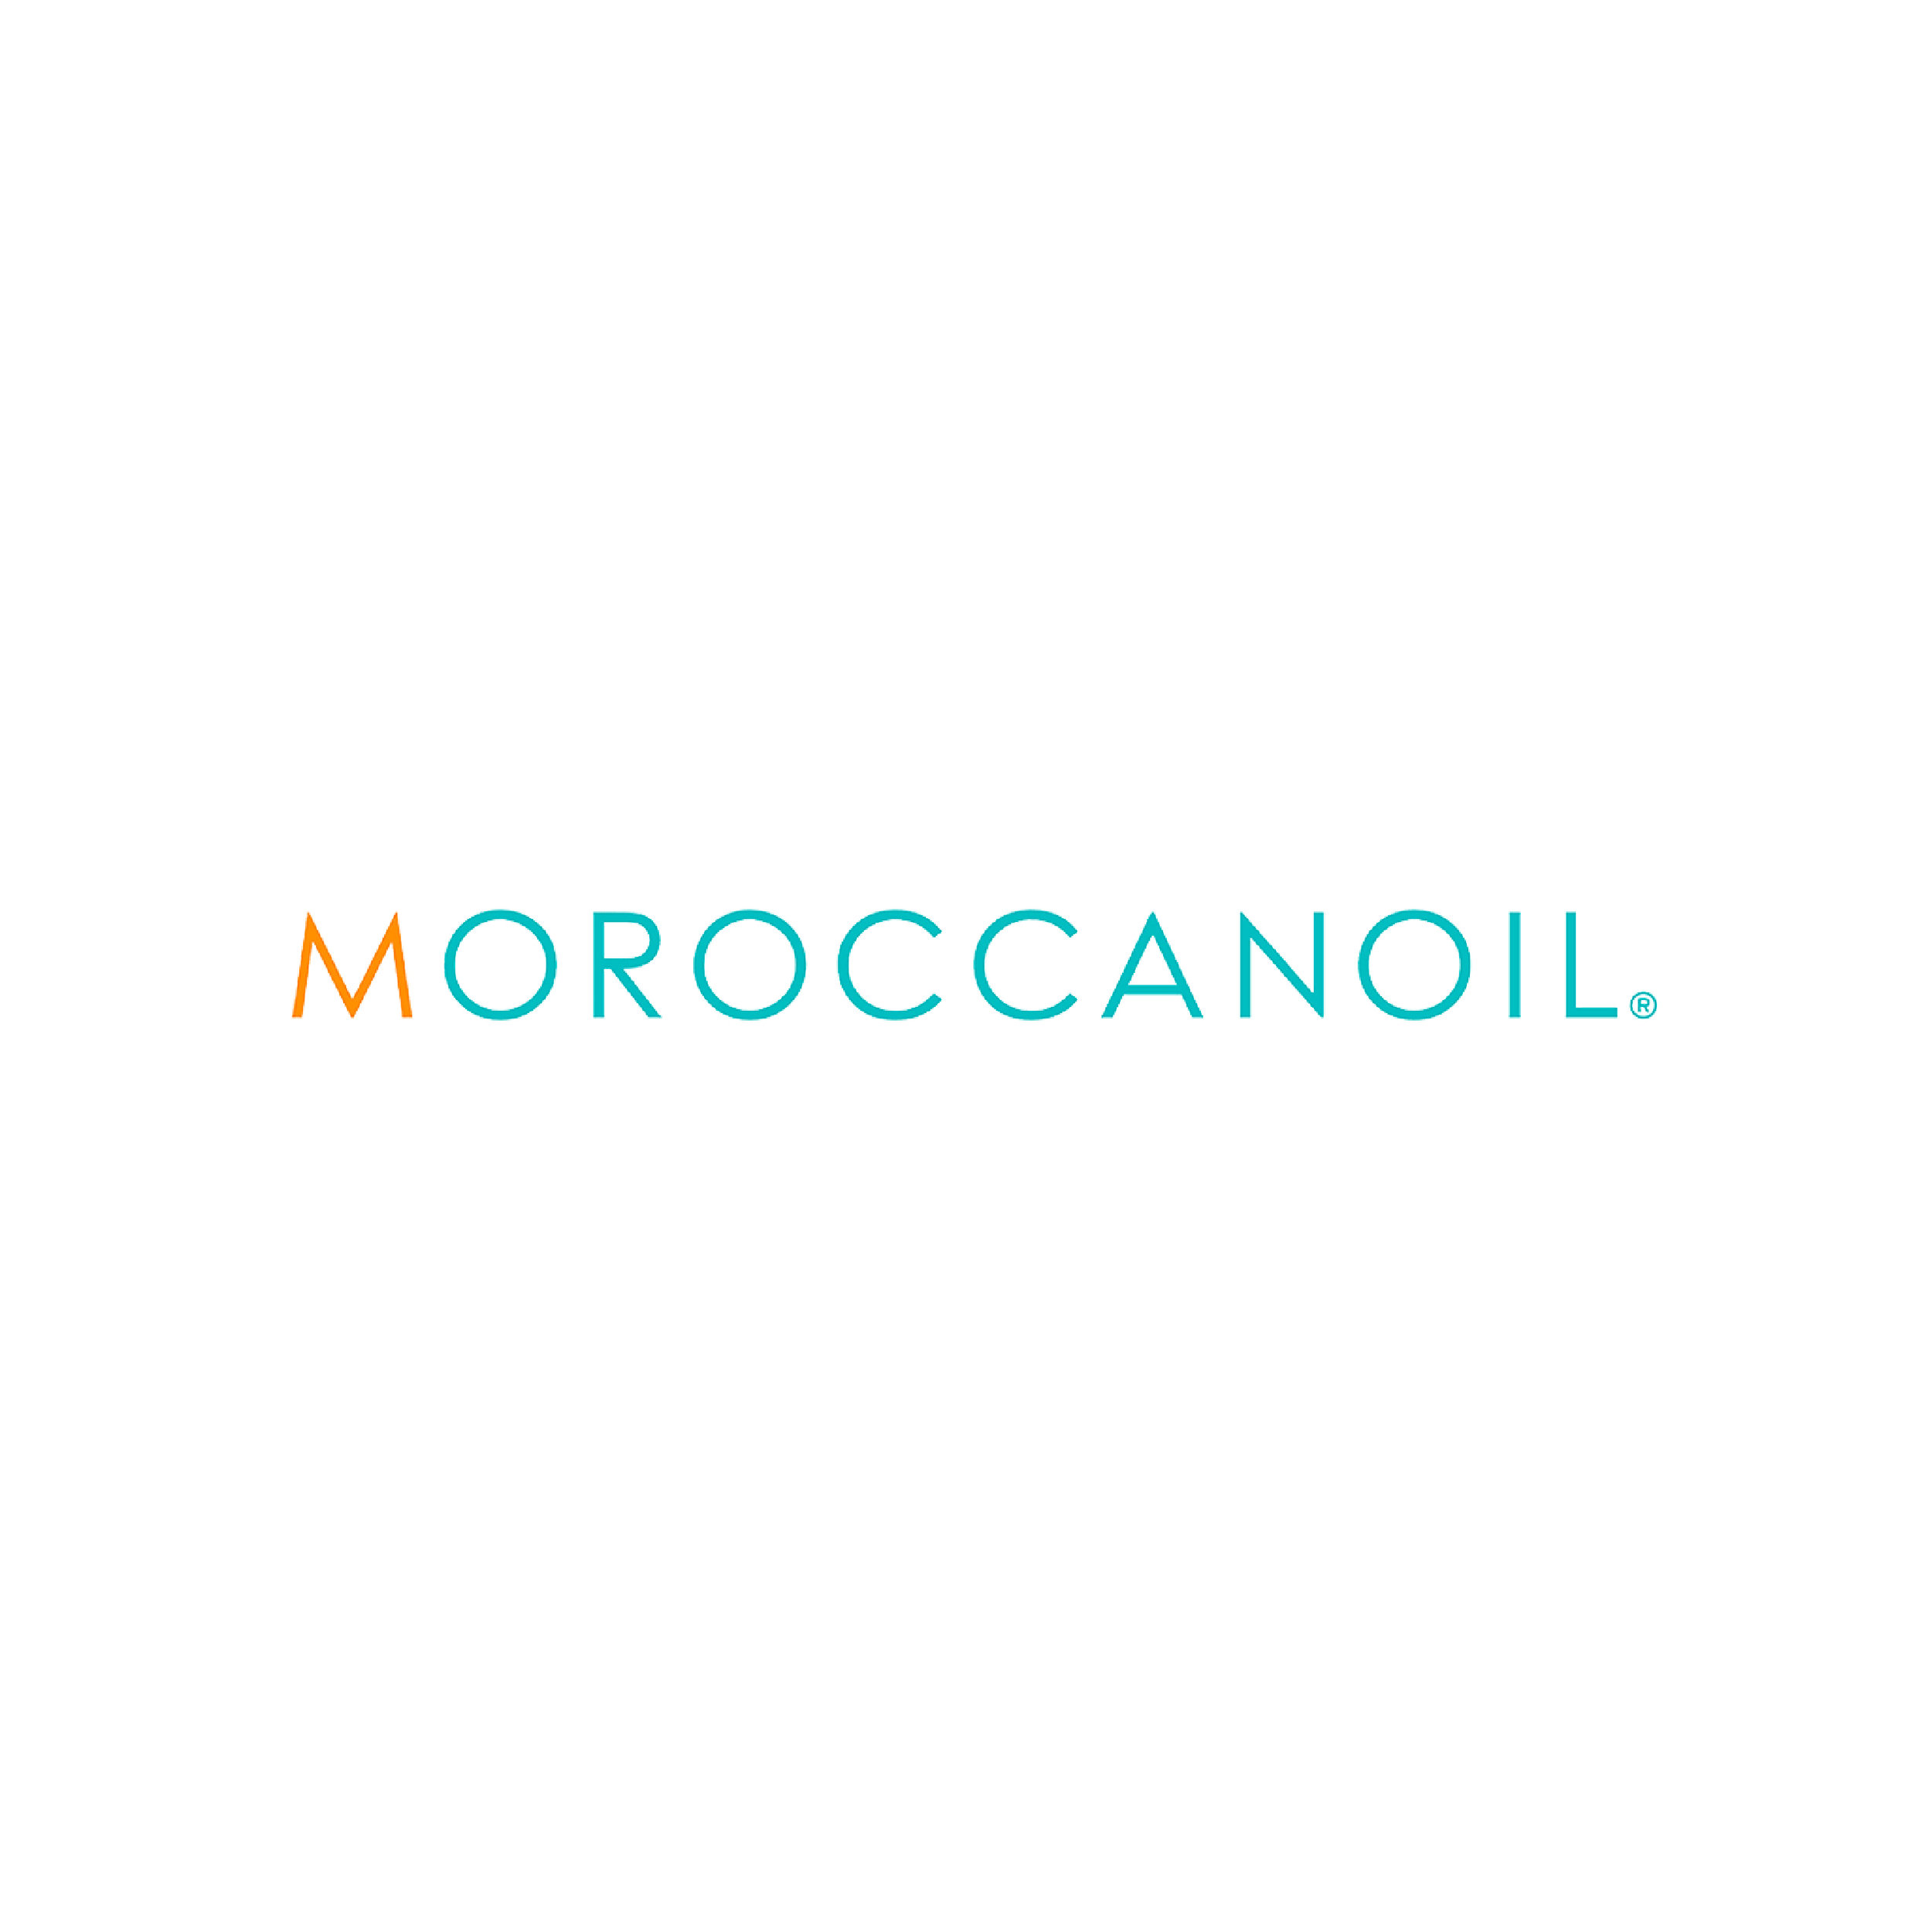 Moroccanoillogo.jpg